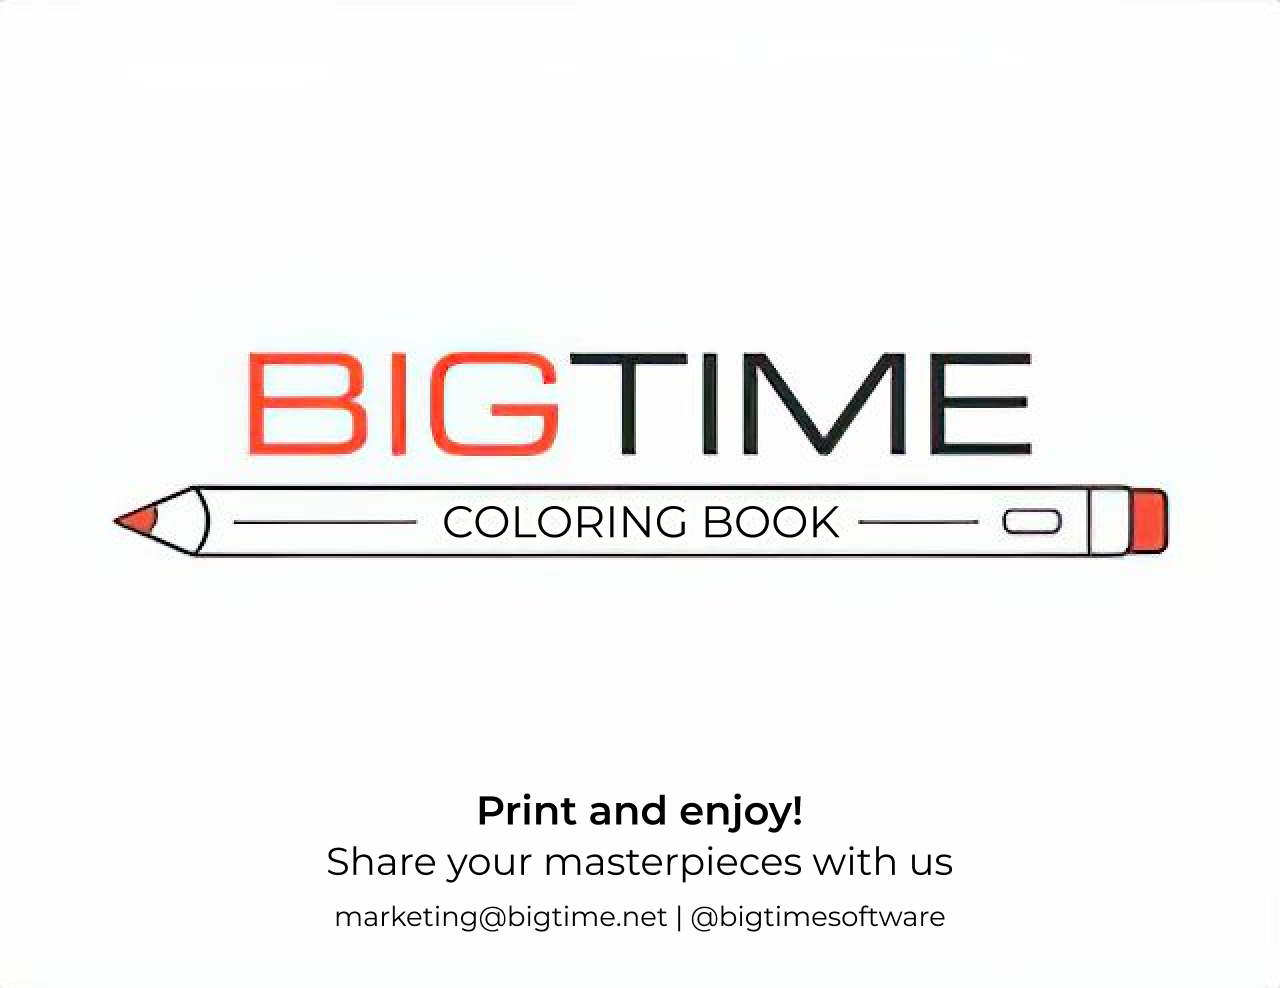 BigTime Coloring Book